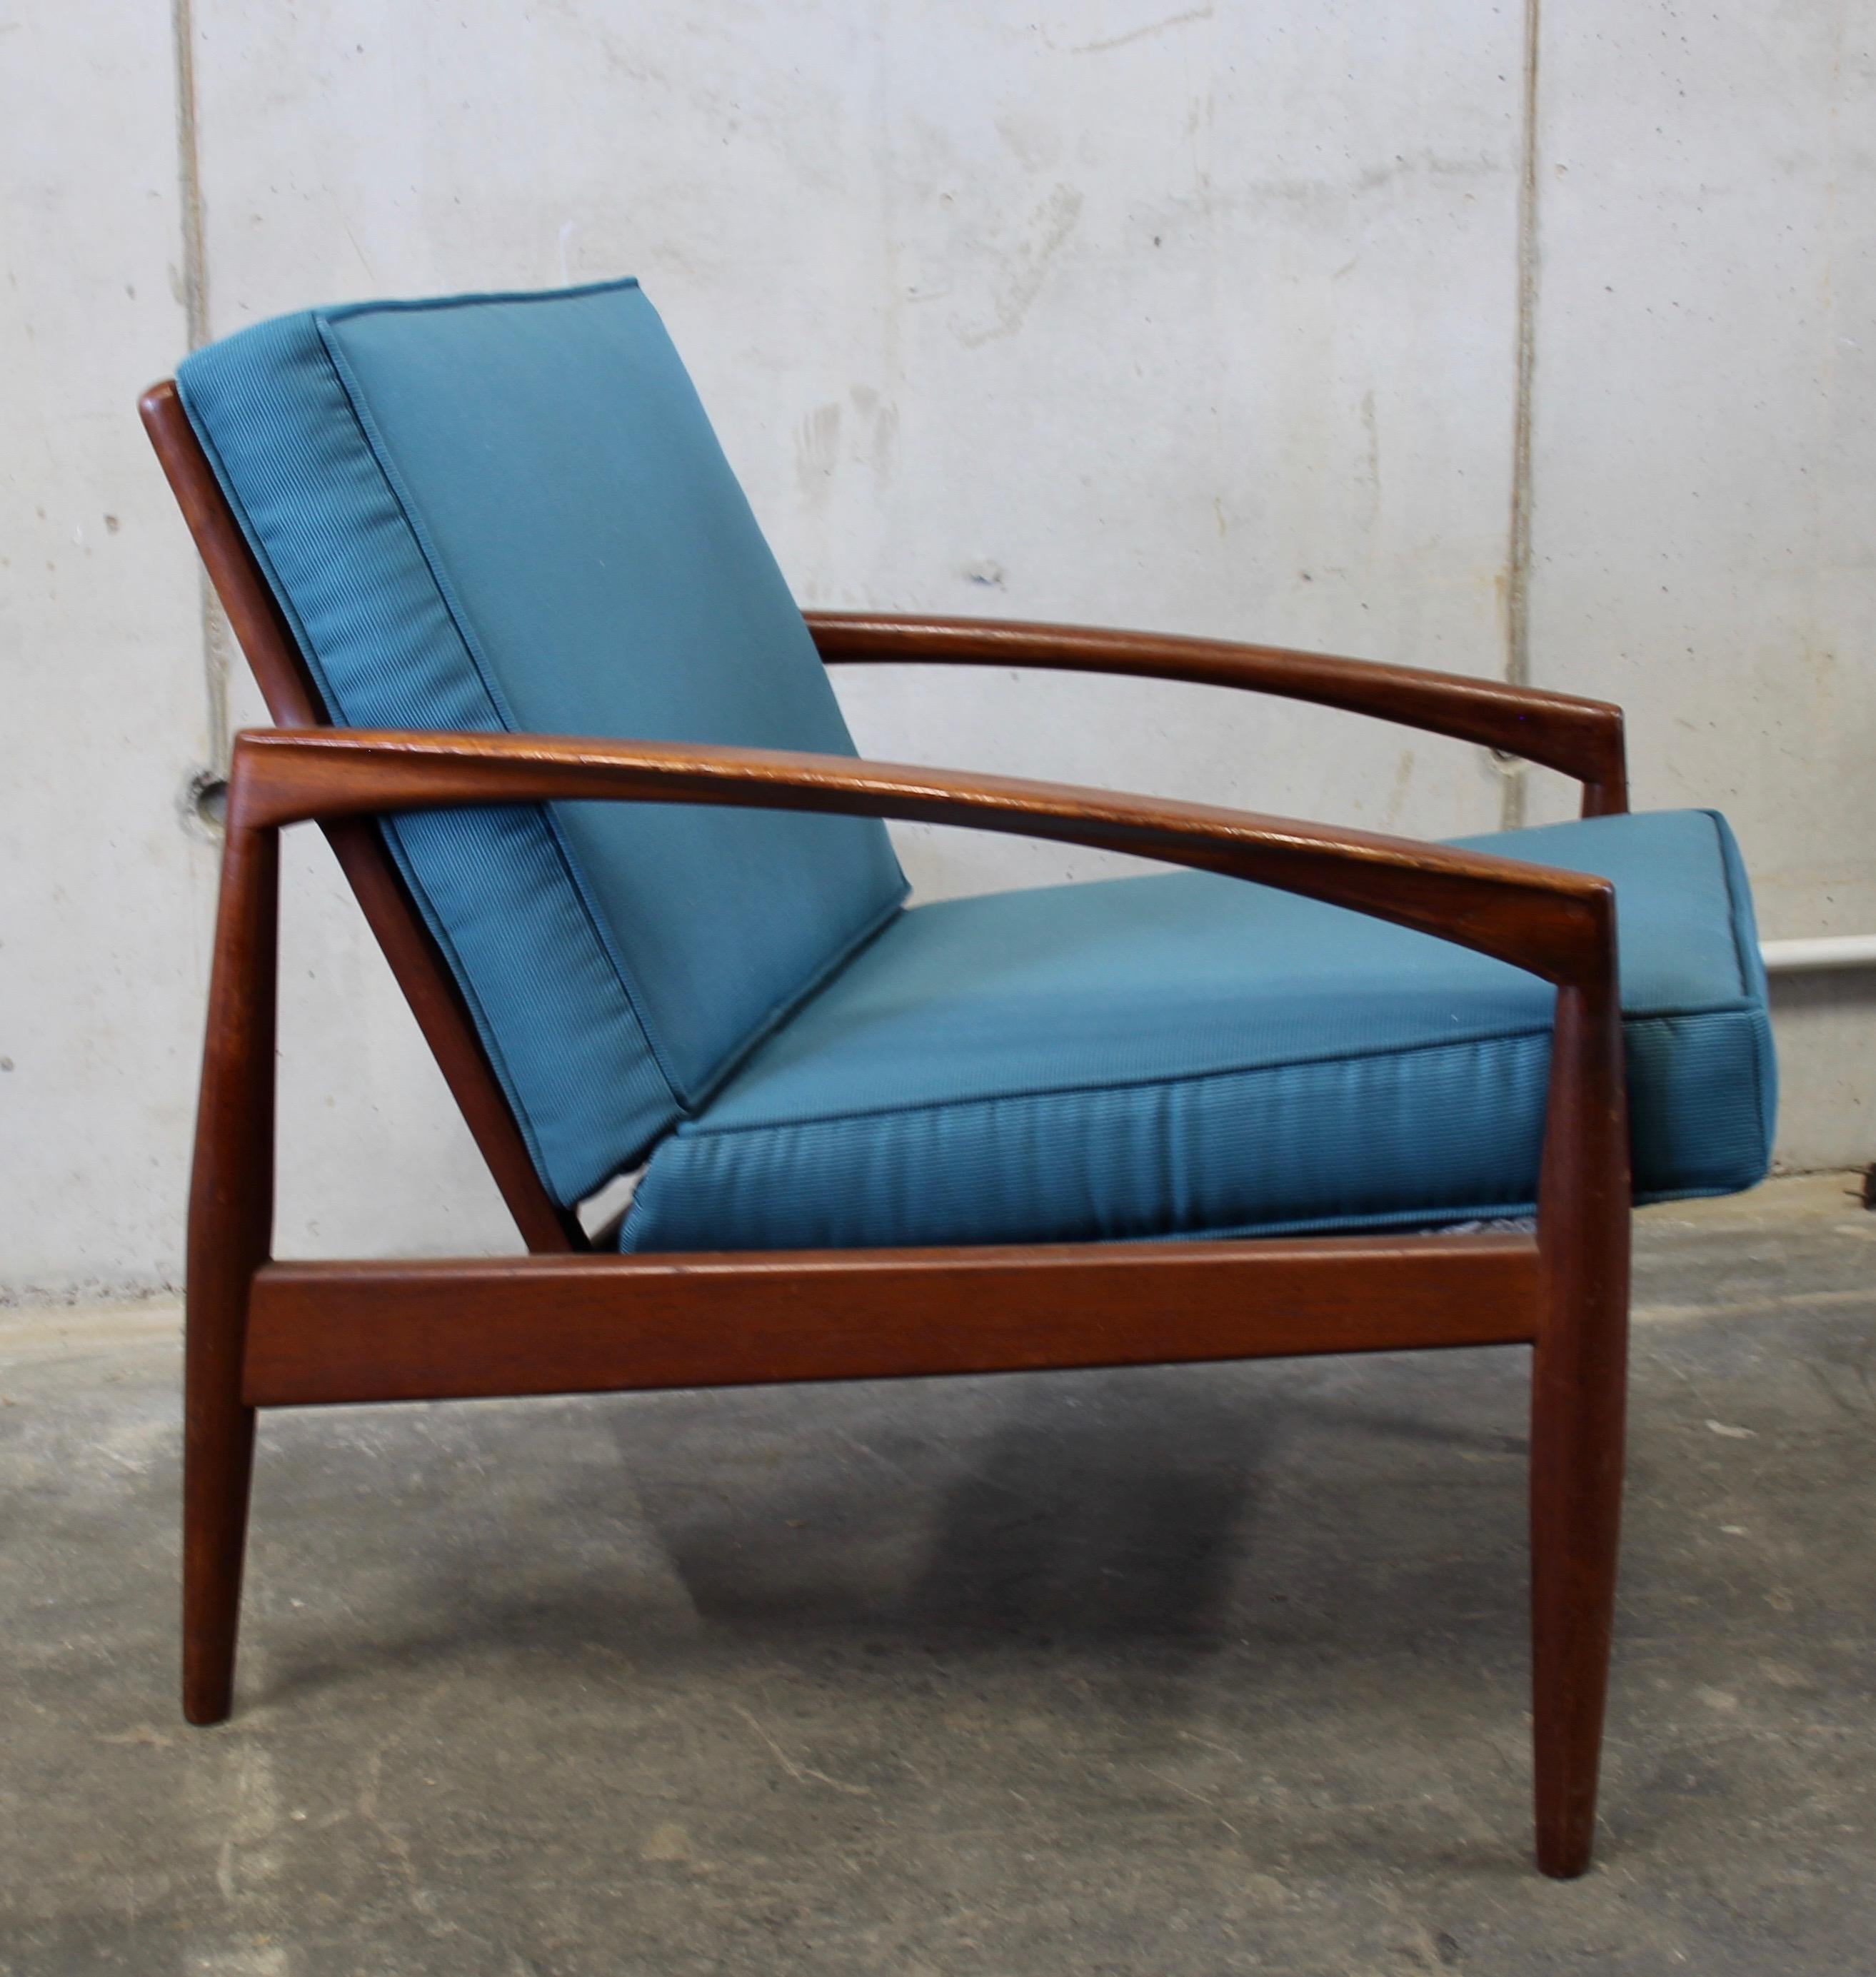 Mid-Century Modern Danish Kai Kristiansen Paper-Knife Chair, Easy Chair Teak, with New Blue Fabric